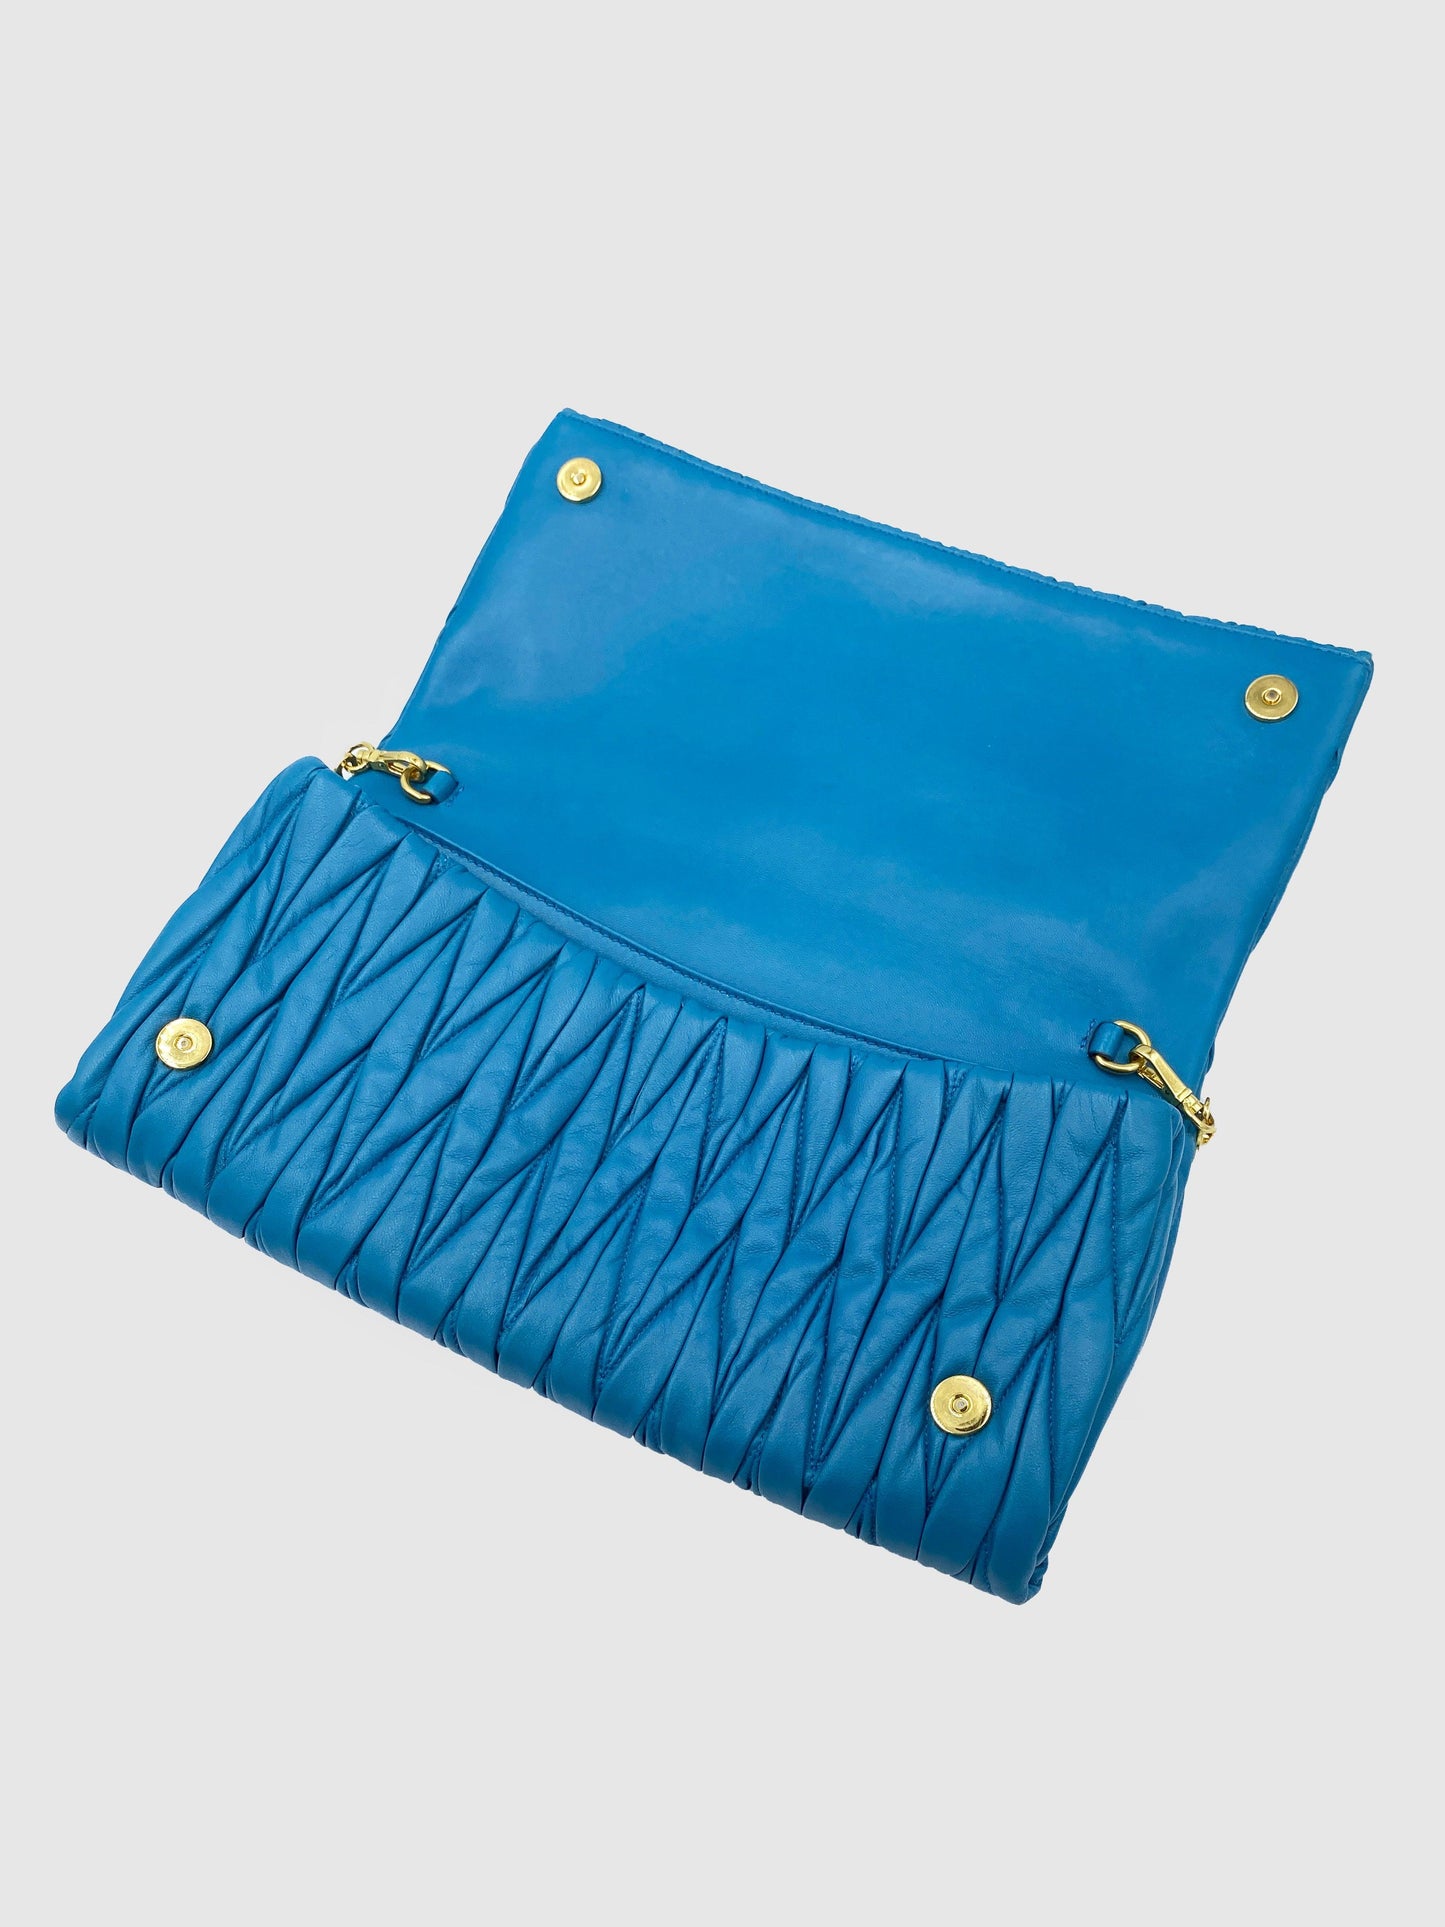 Miu Miu Teal Matelasse Leather Shoulder Bag - Second Nature Boutique